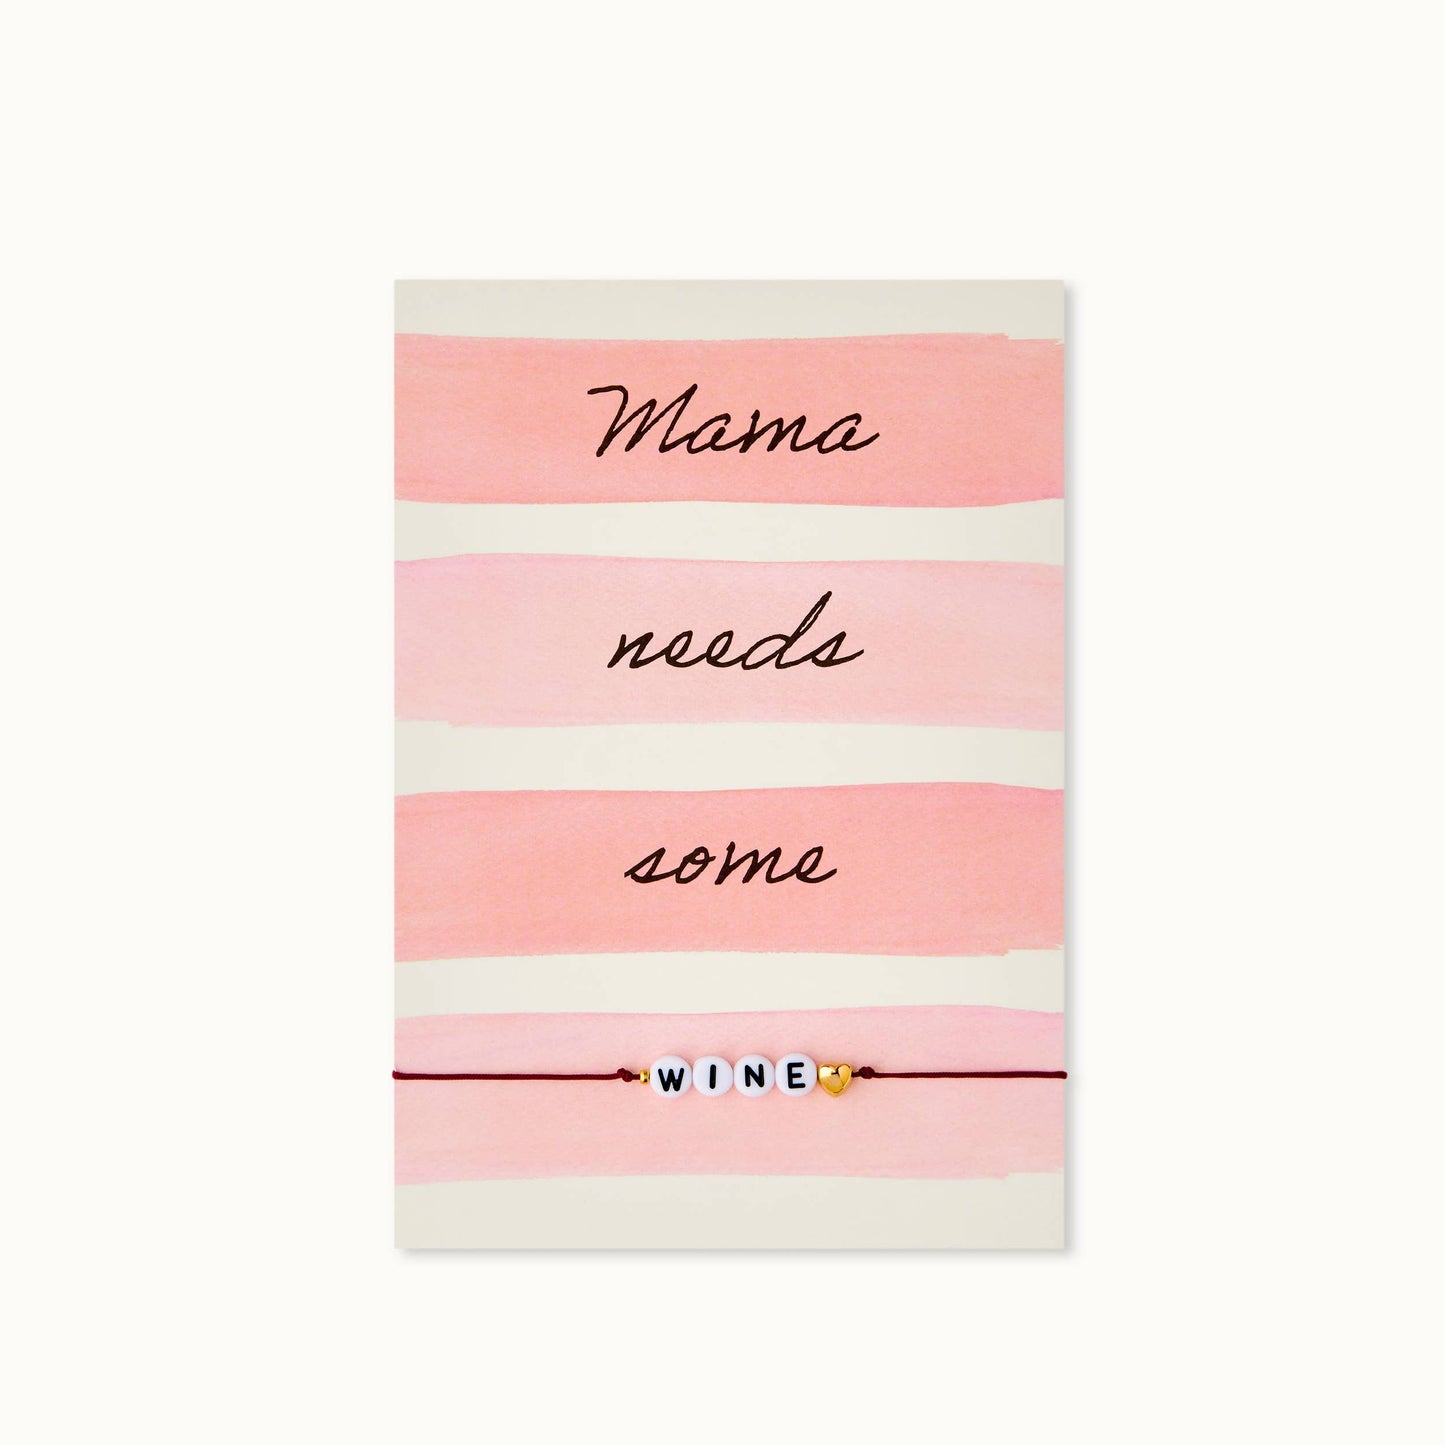 Bracelet Card: Mama needs some Wine - Grußkarte - Who said